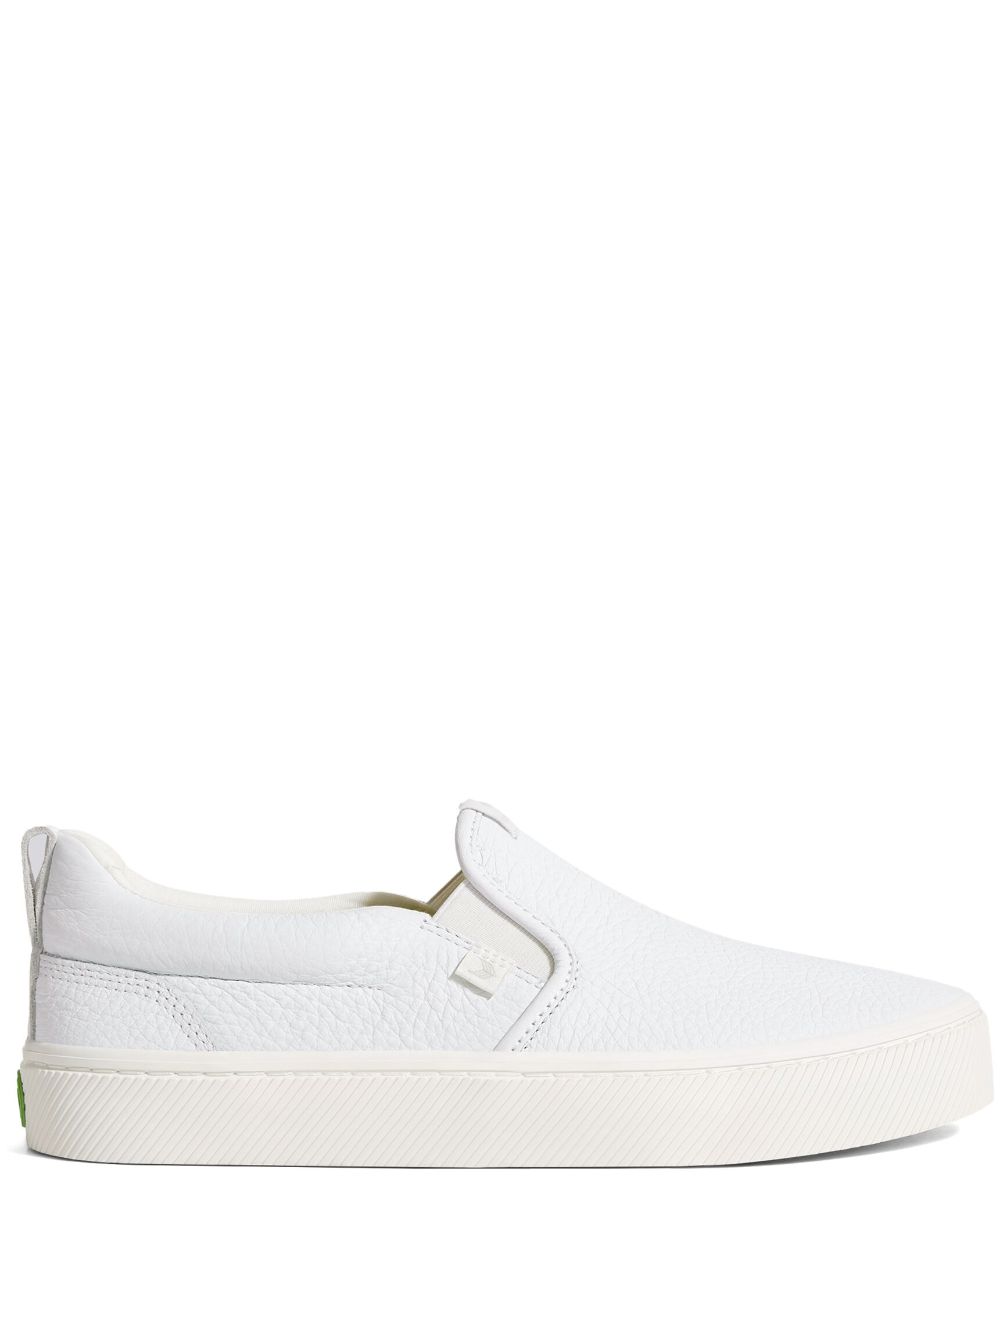 Cariuma Klassische Slip-On-Sneakers - Weiß